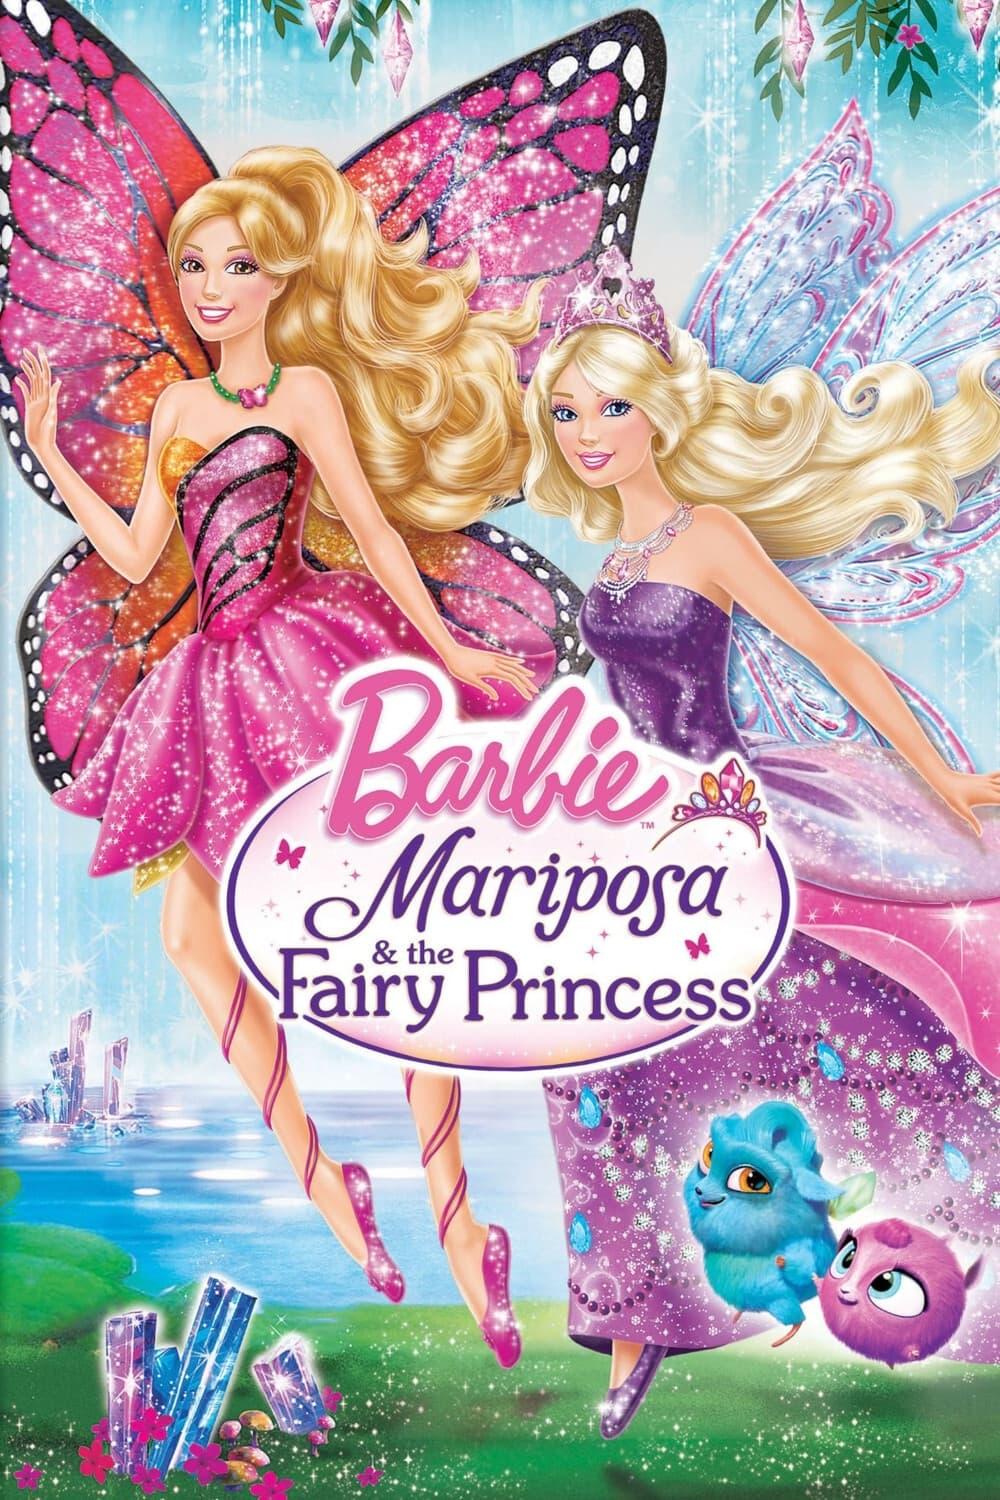 Barbie Mariposa & the Fairy Princess poster